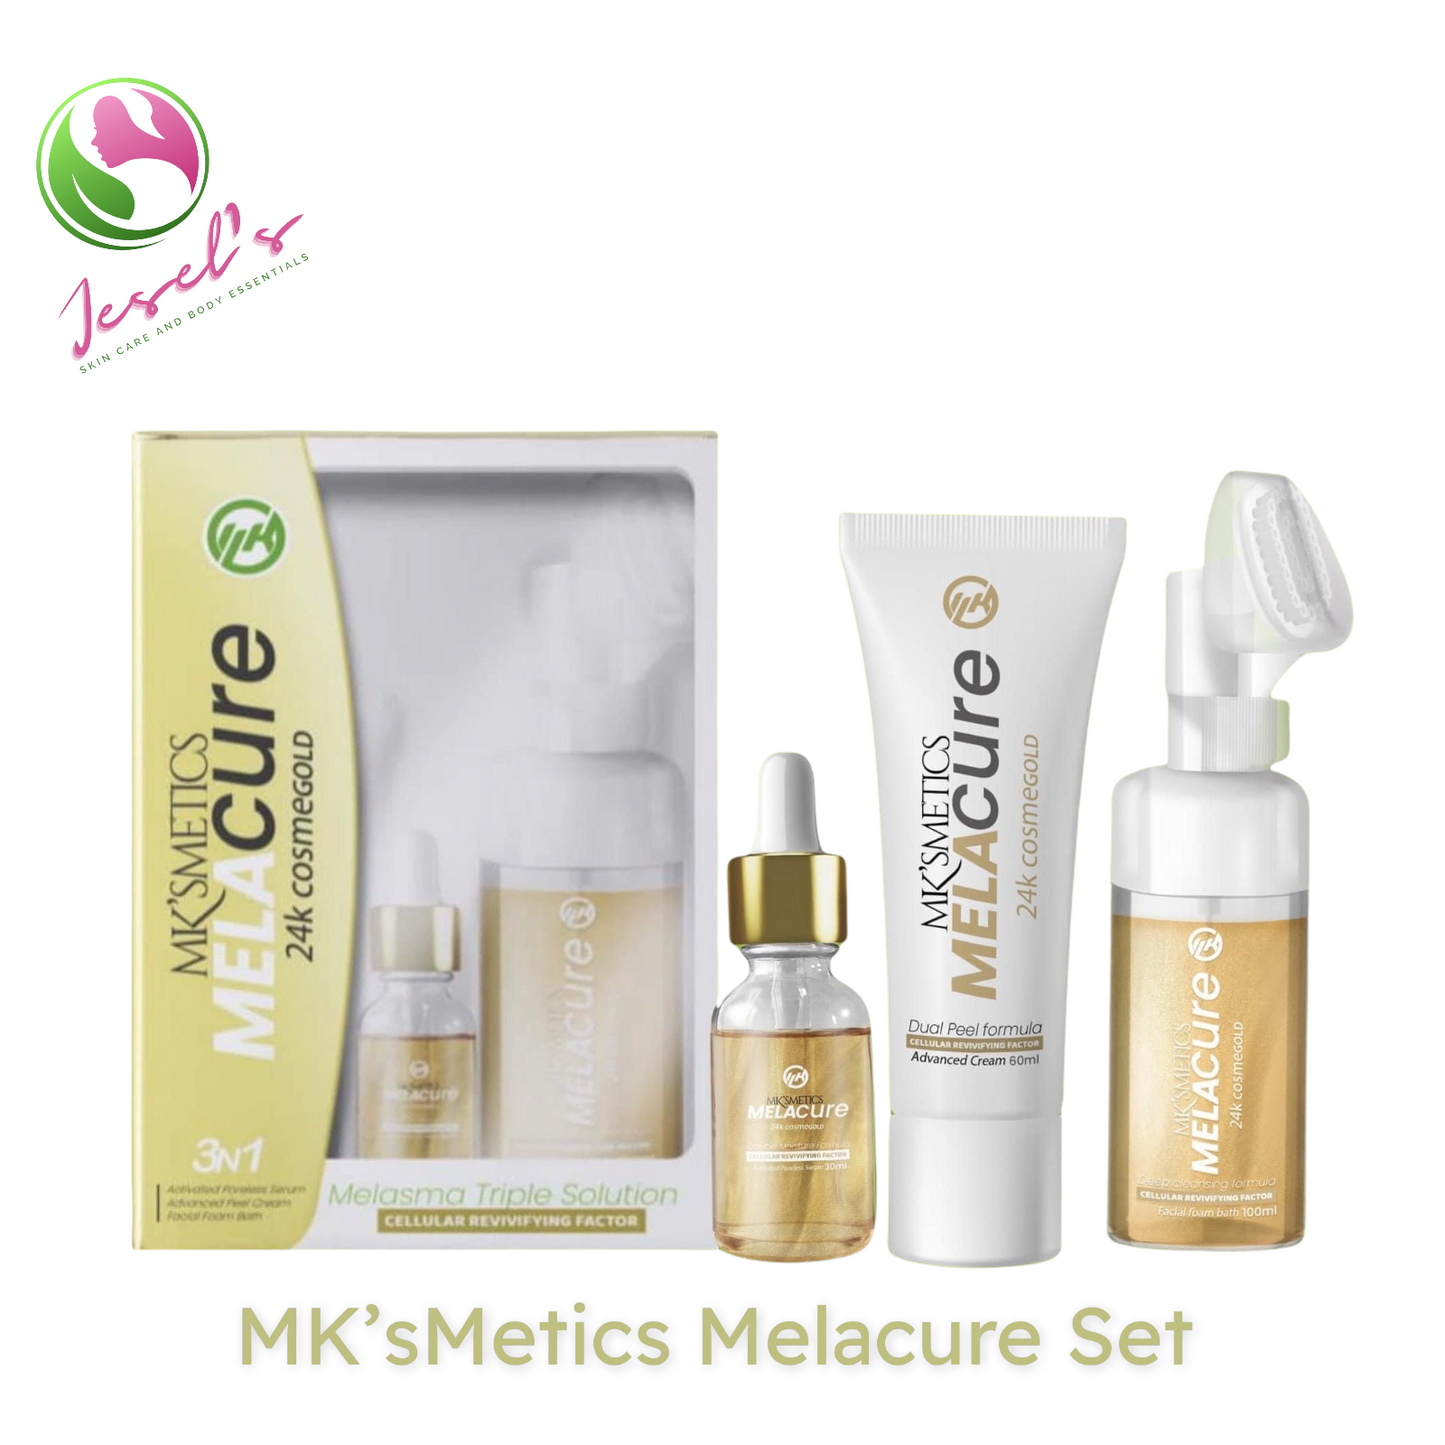 MK’smetics Melacure Set